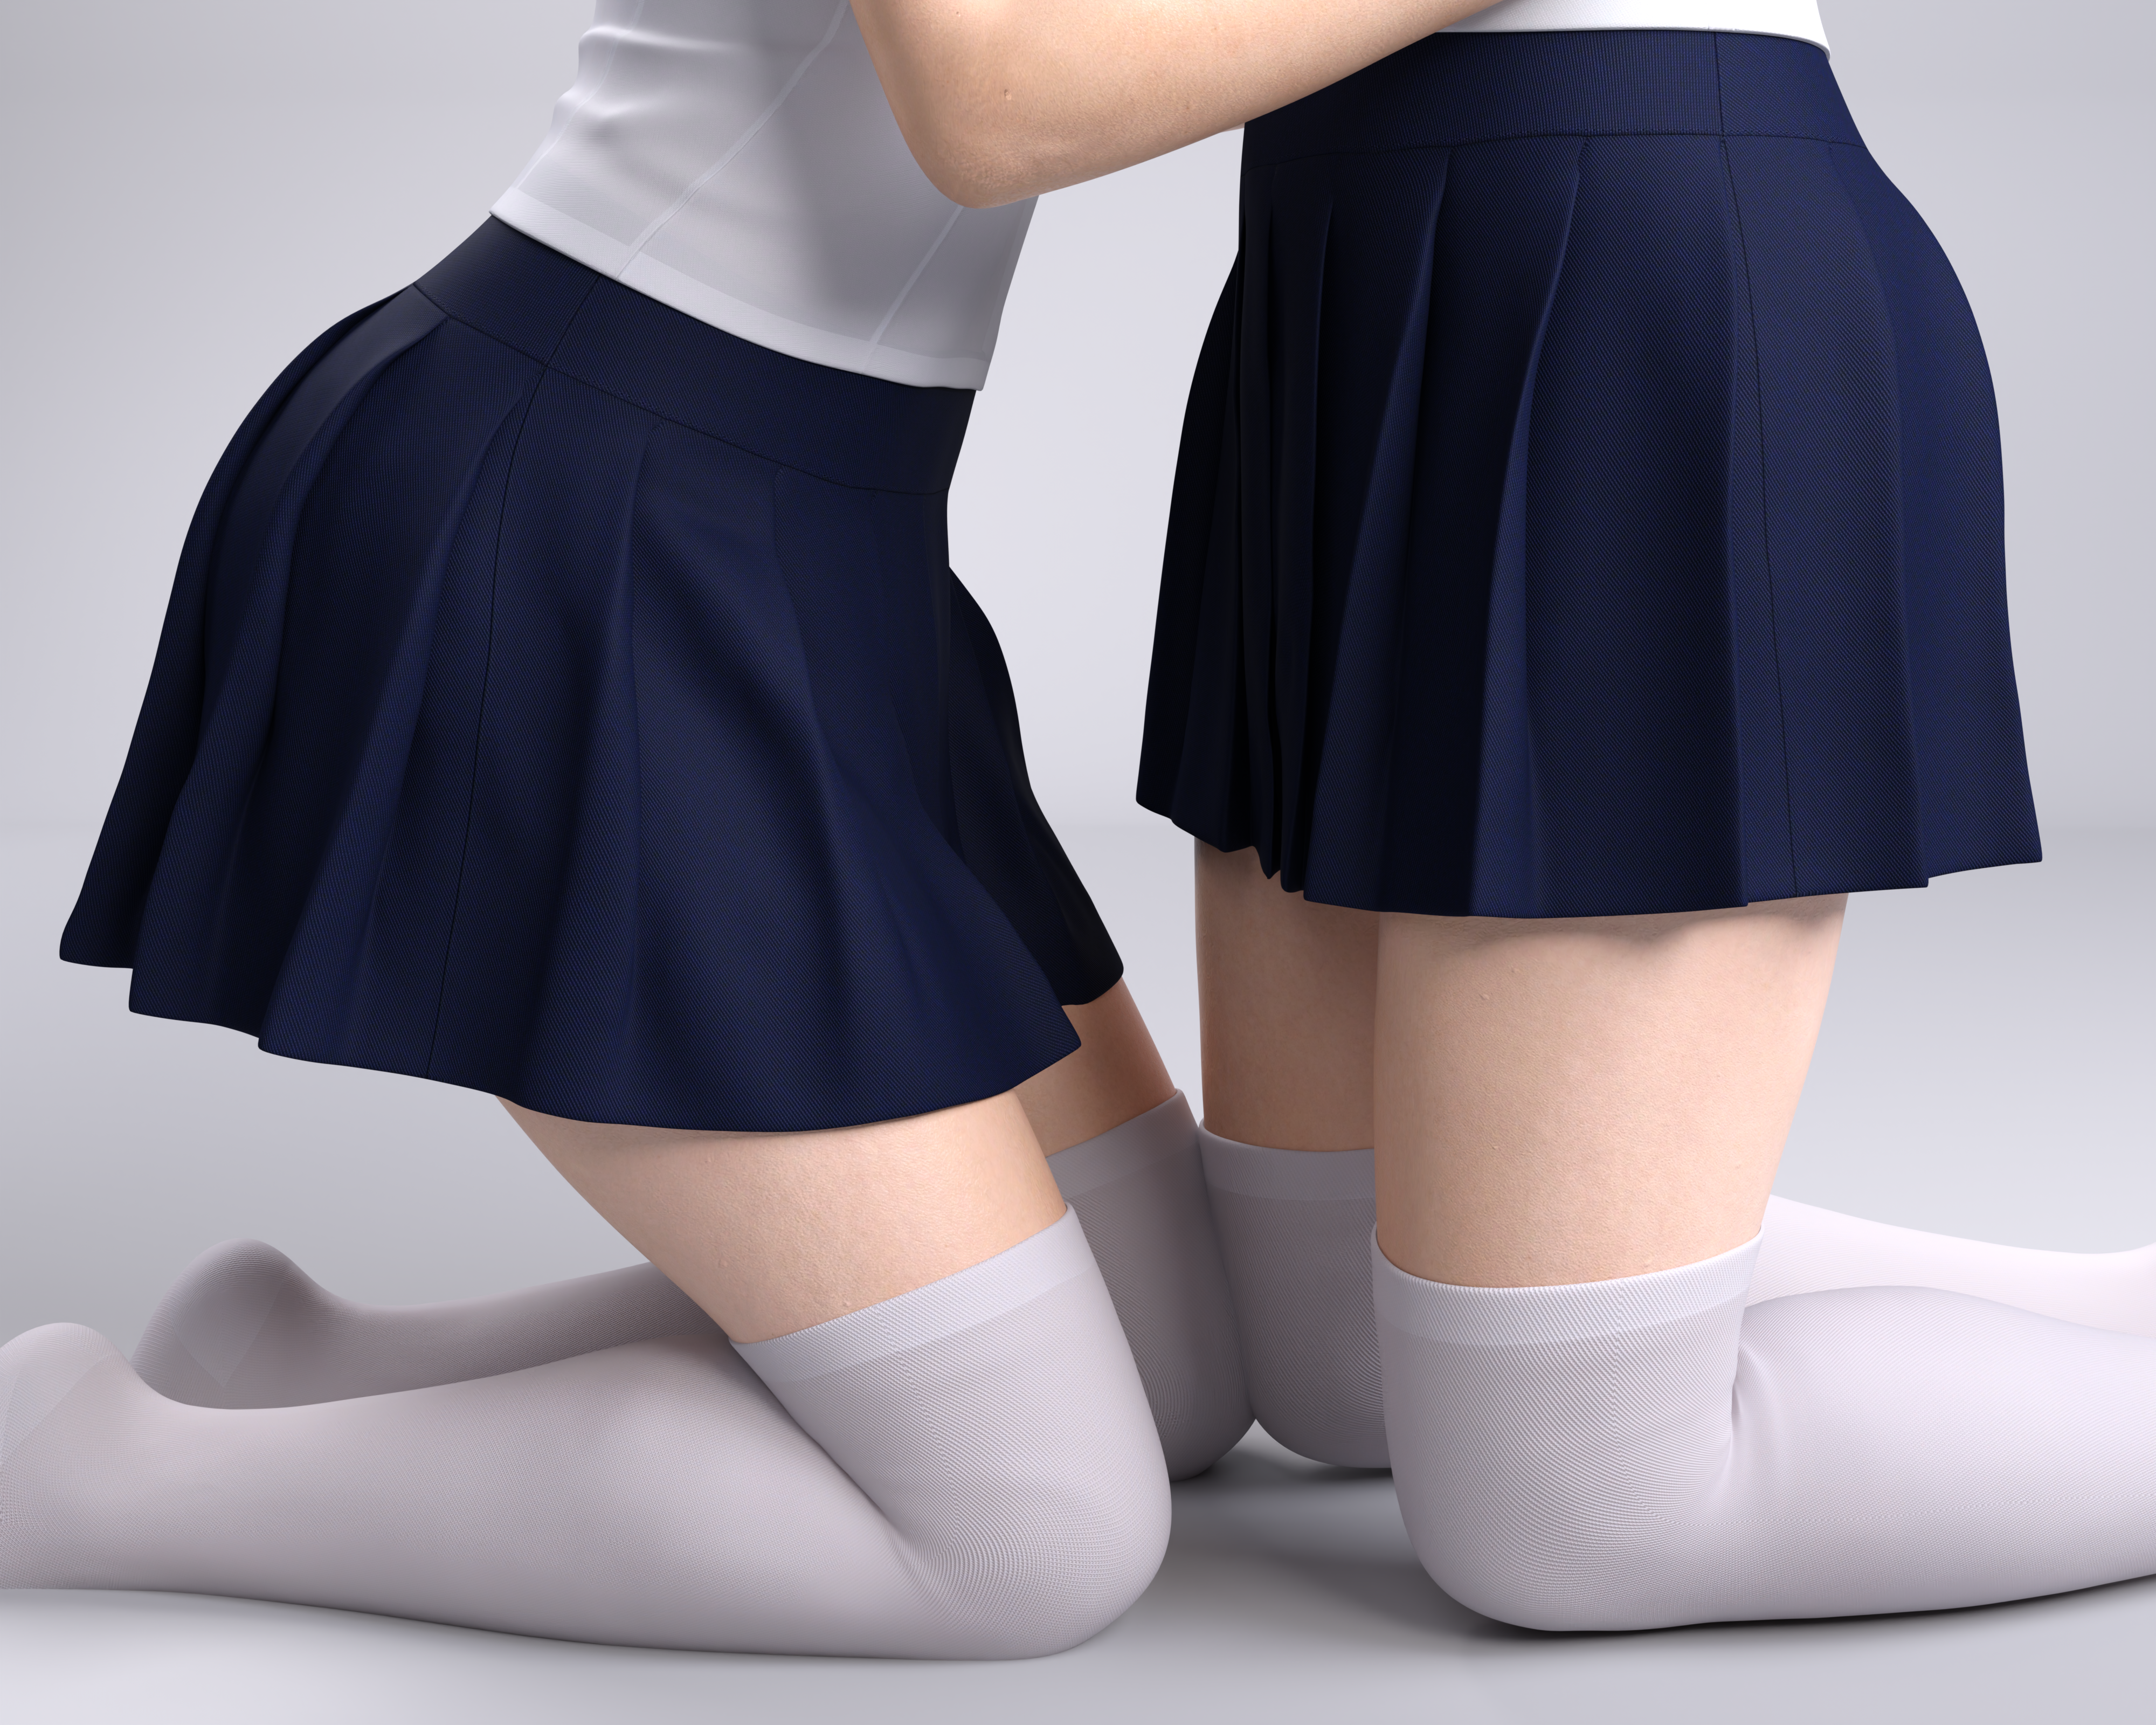 General 4000x3200 schoolgirl kneeling school uniform thigh-highs white thigh highs GifDoozer